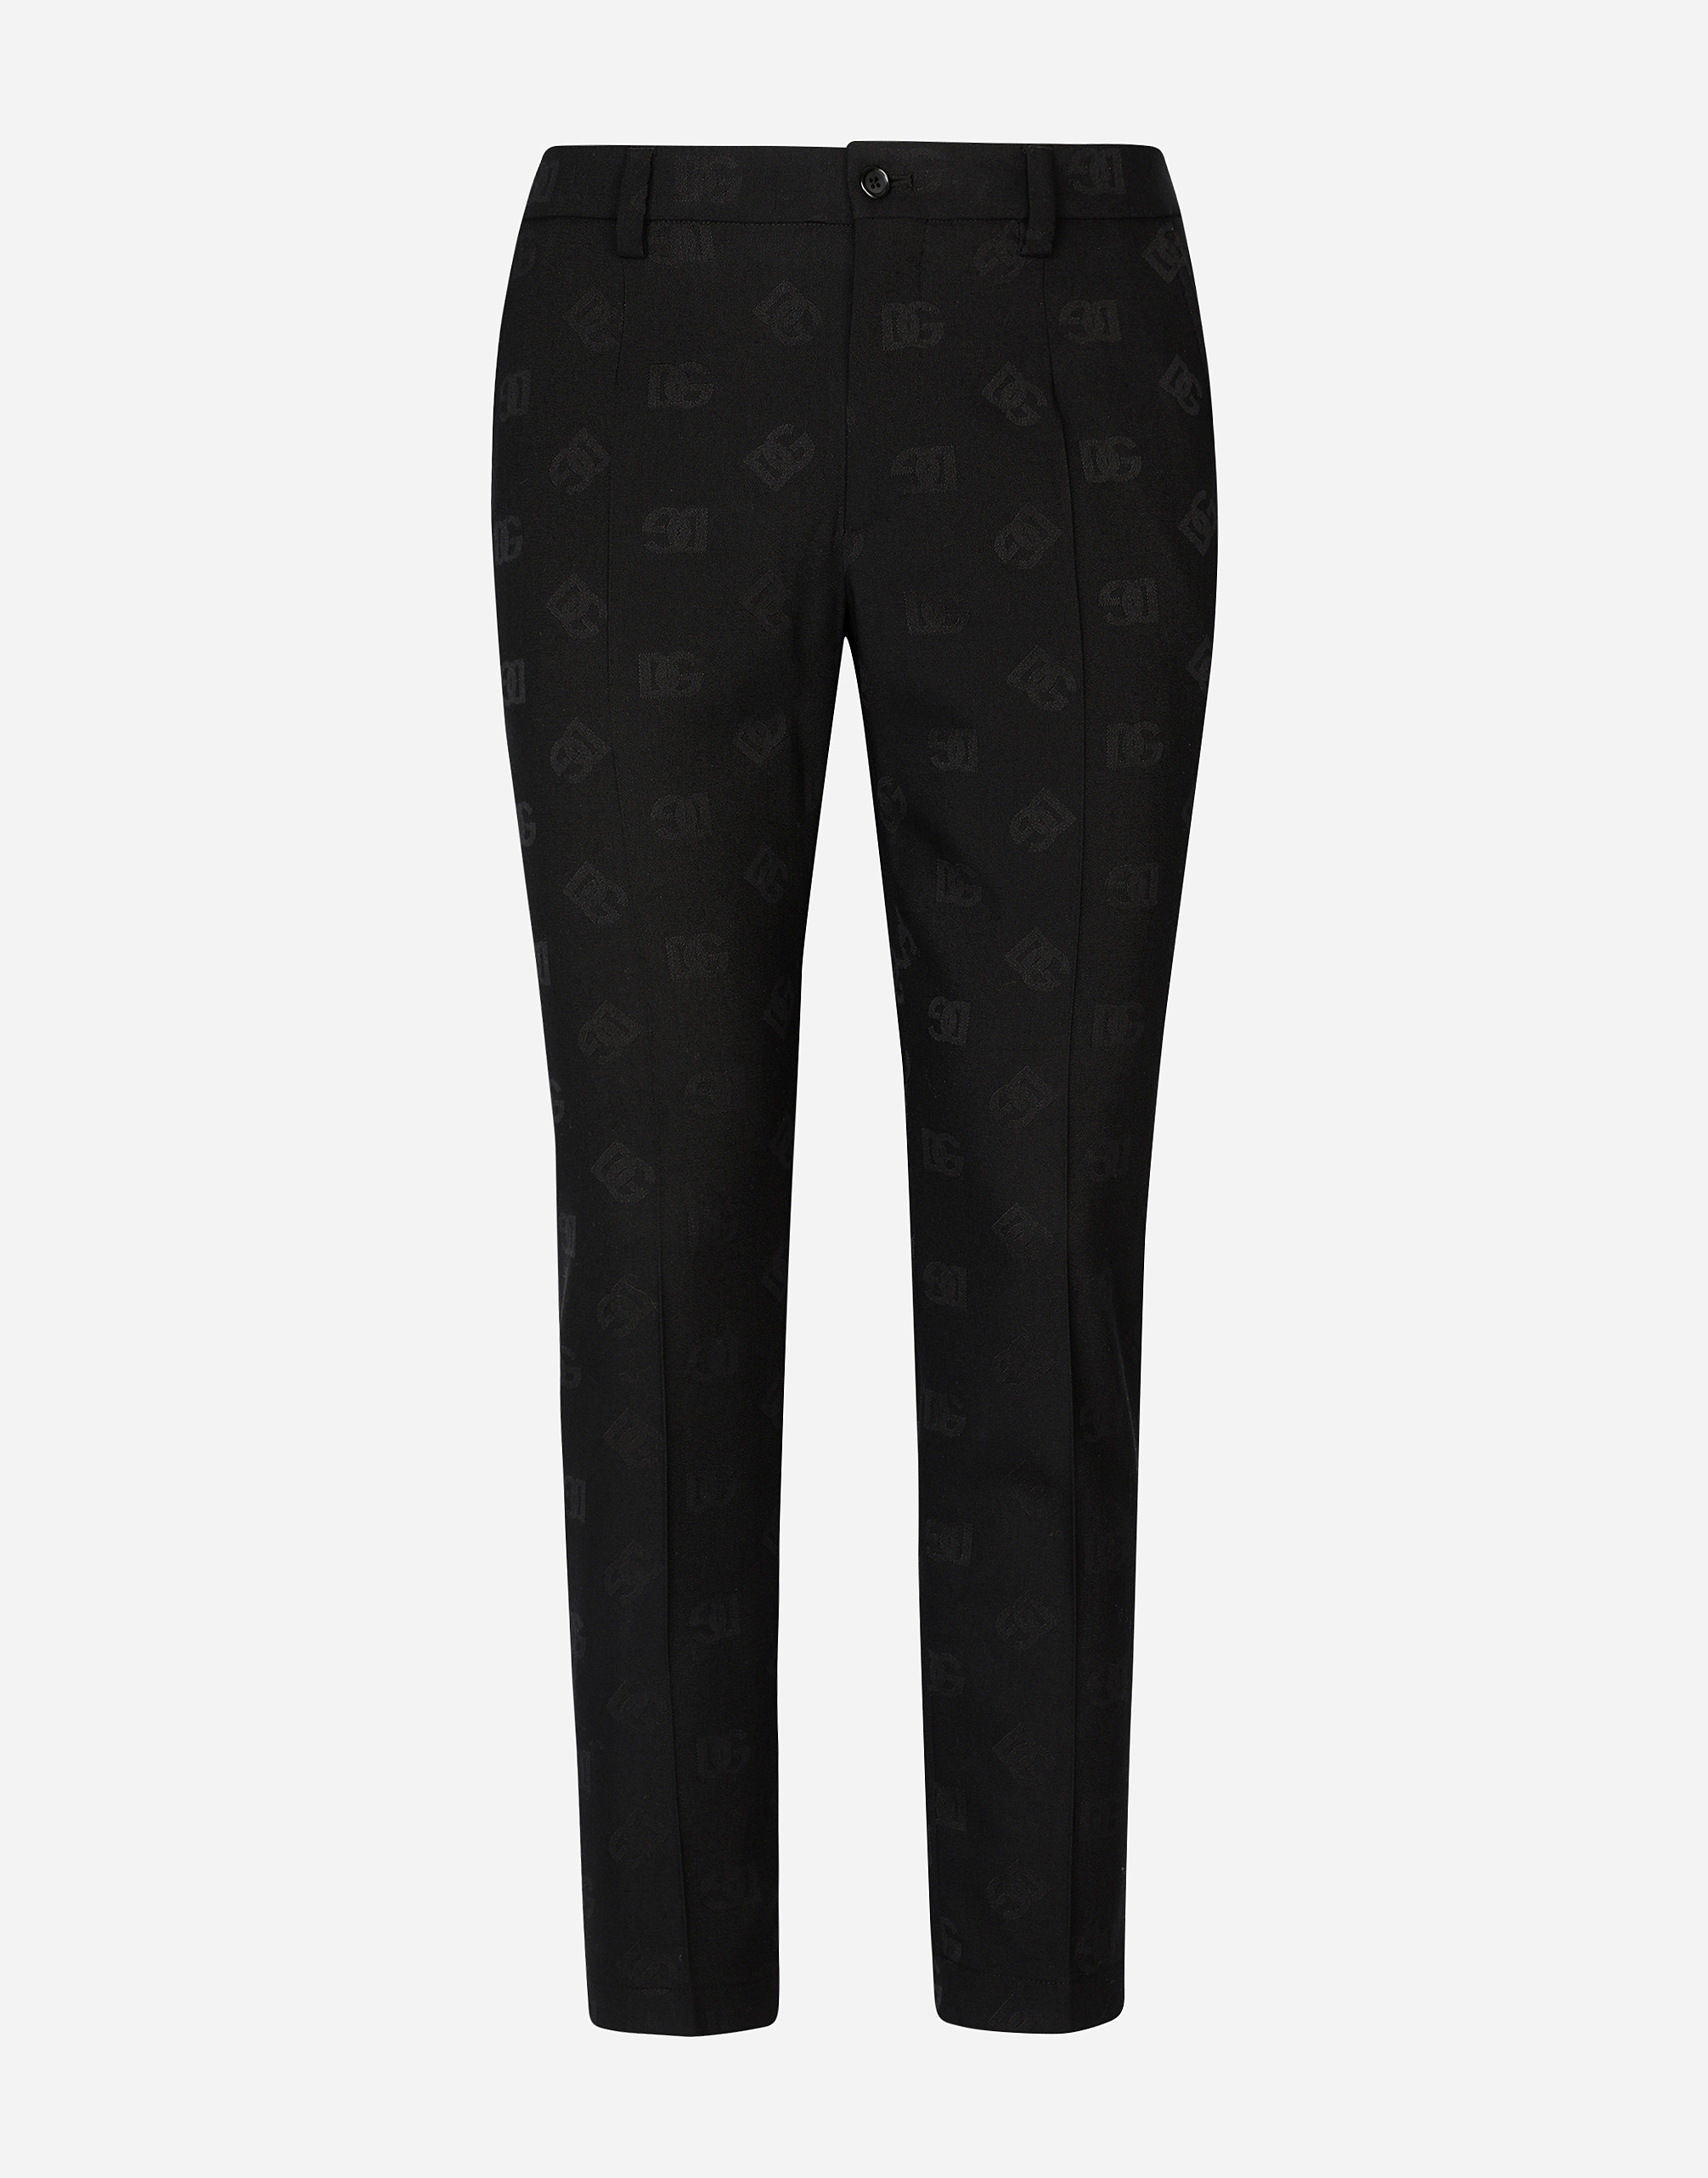 Stretch wool jacquard pants with DG Monogram design in Black